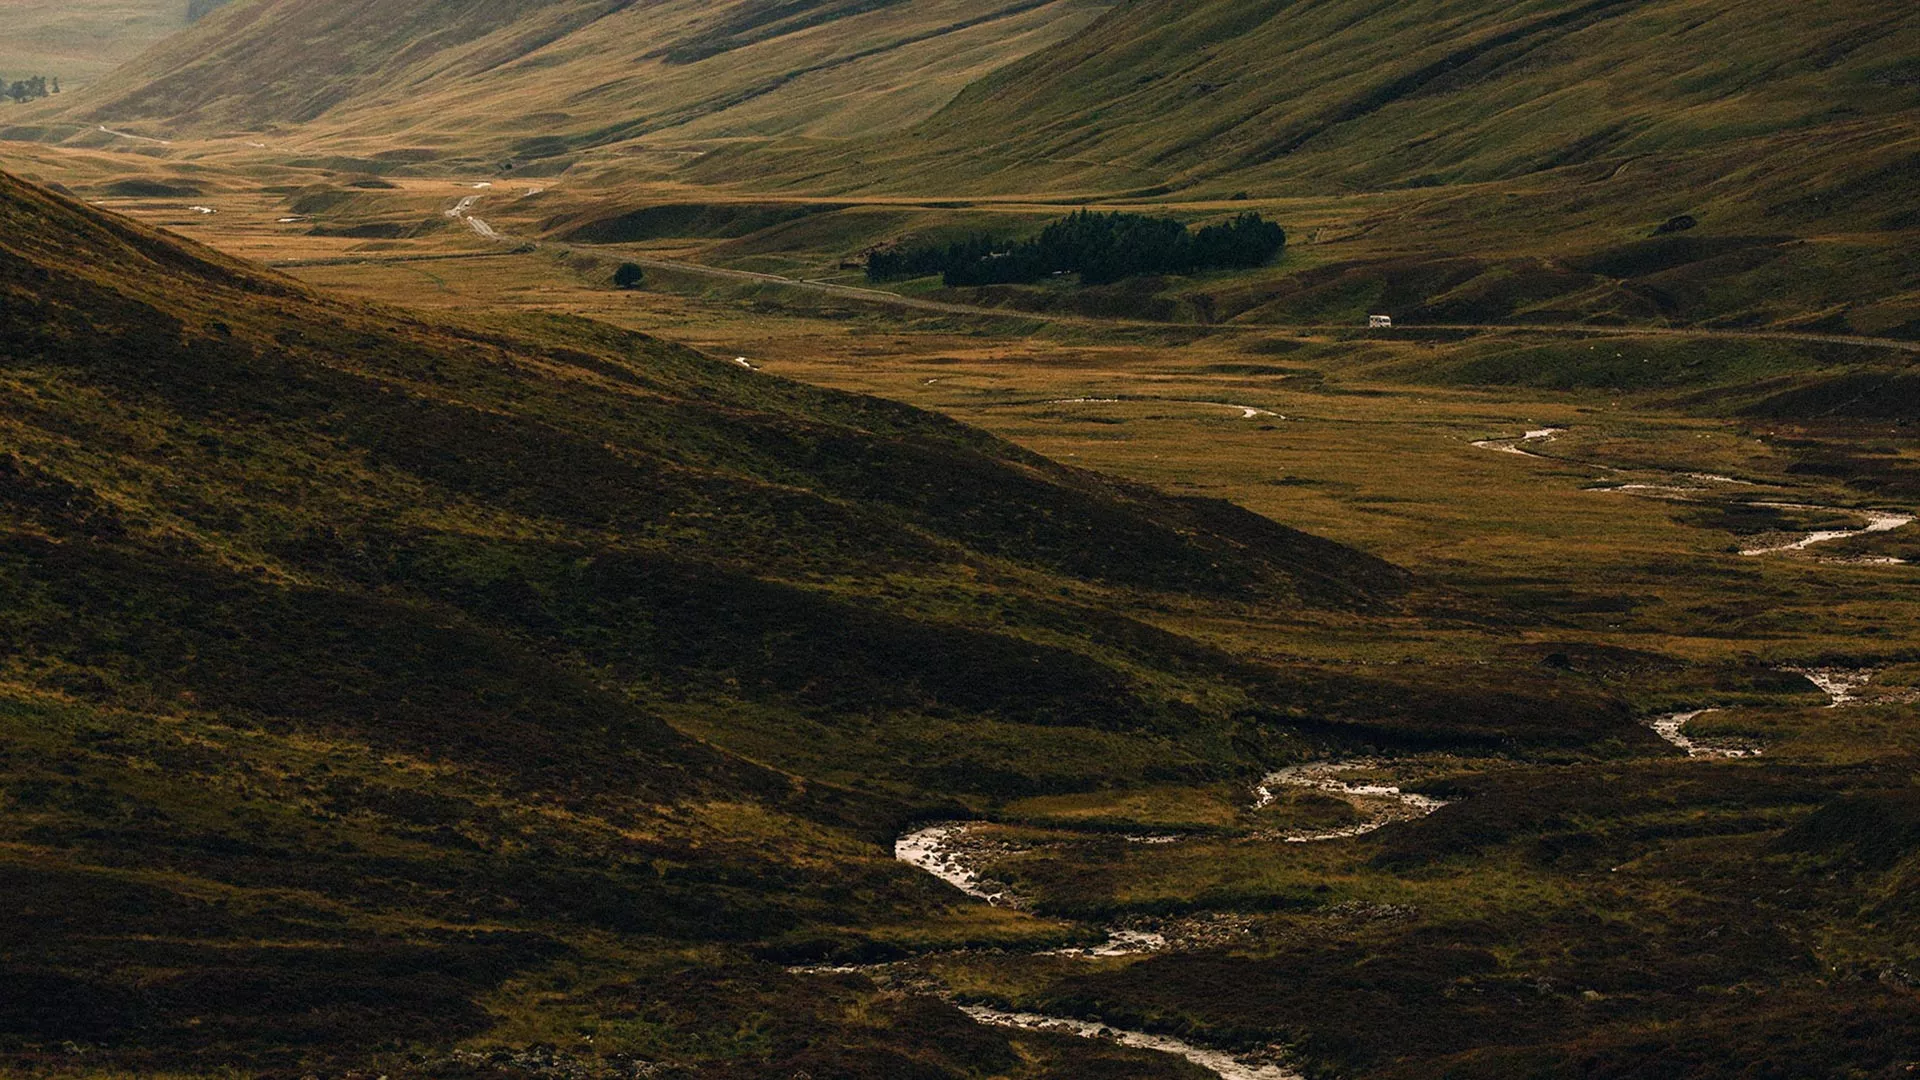 Ardray Scottish glen with streams